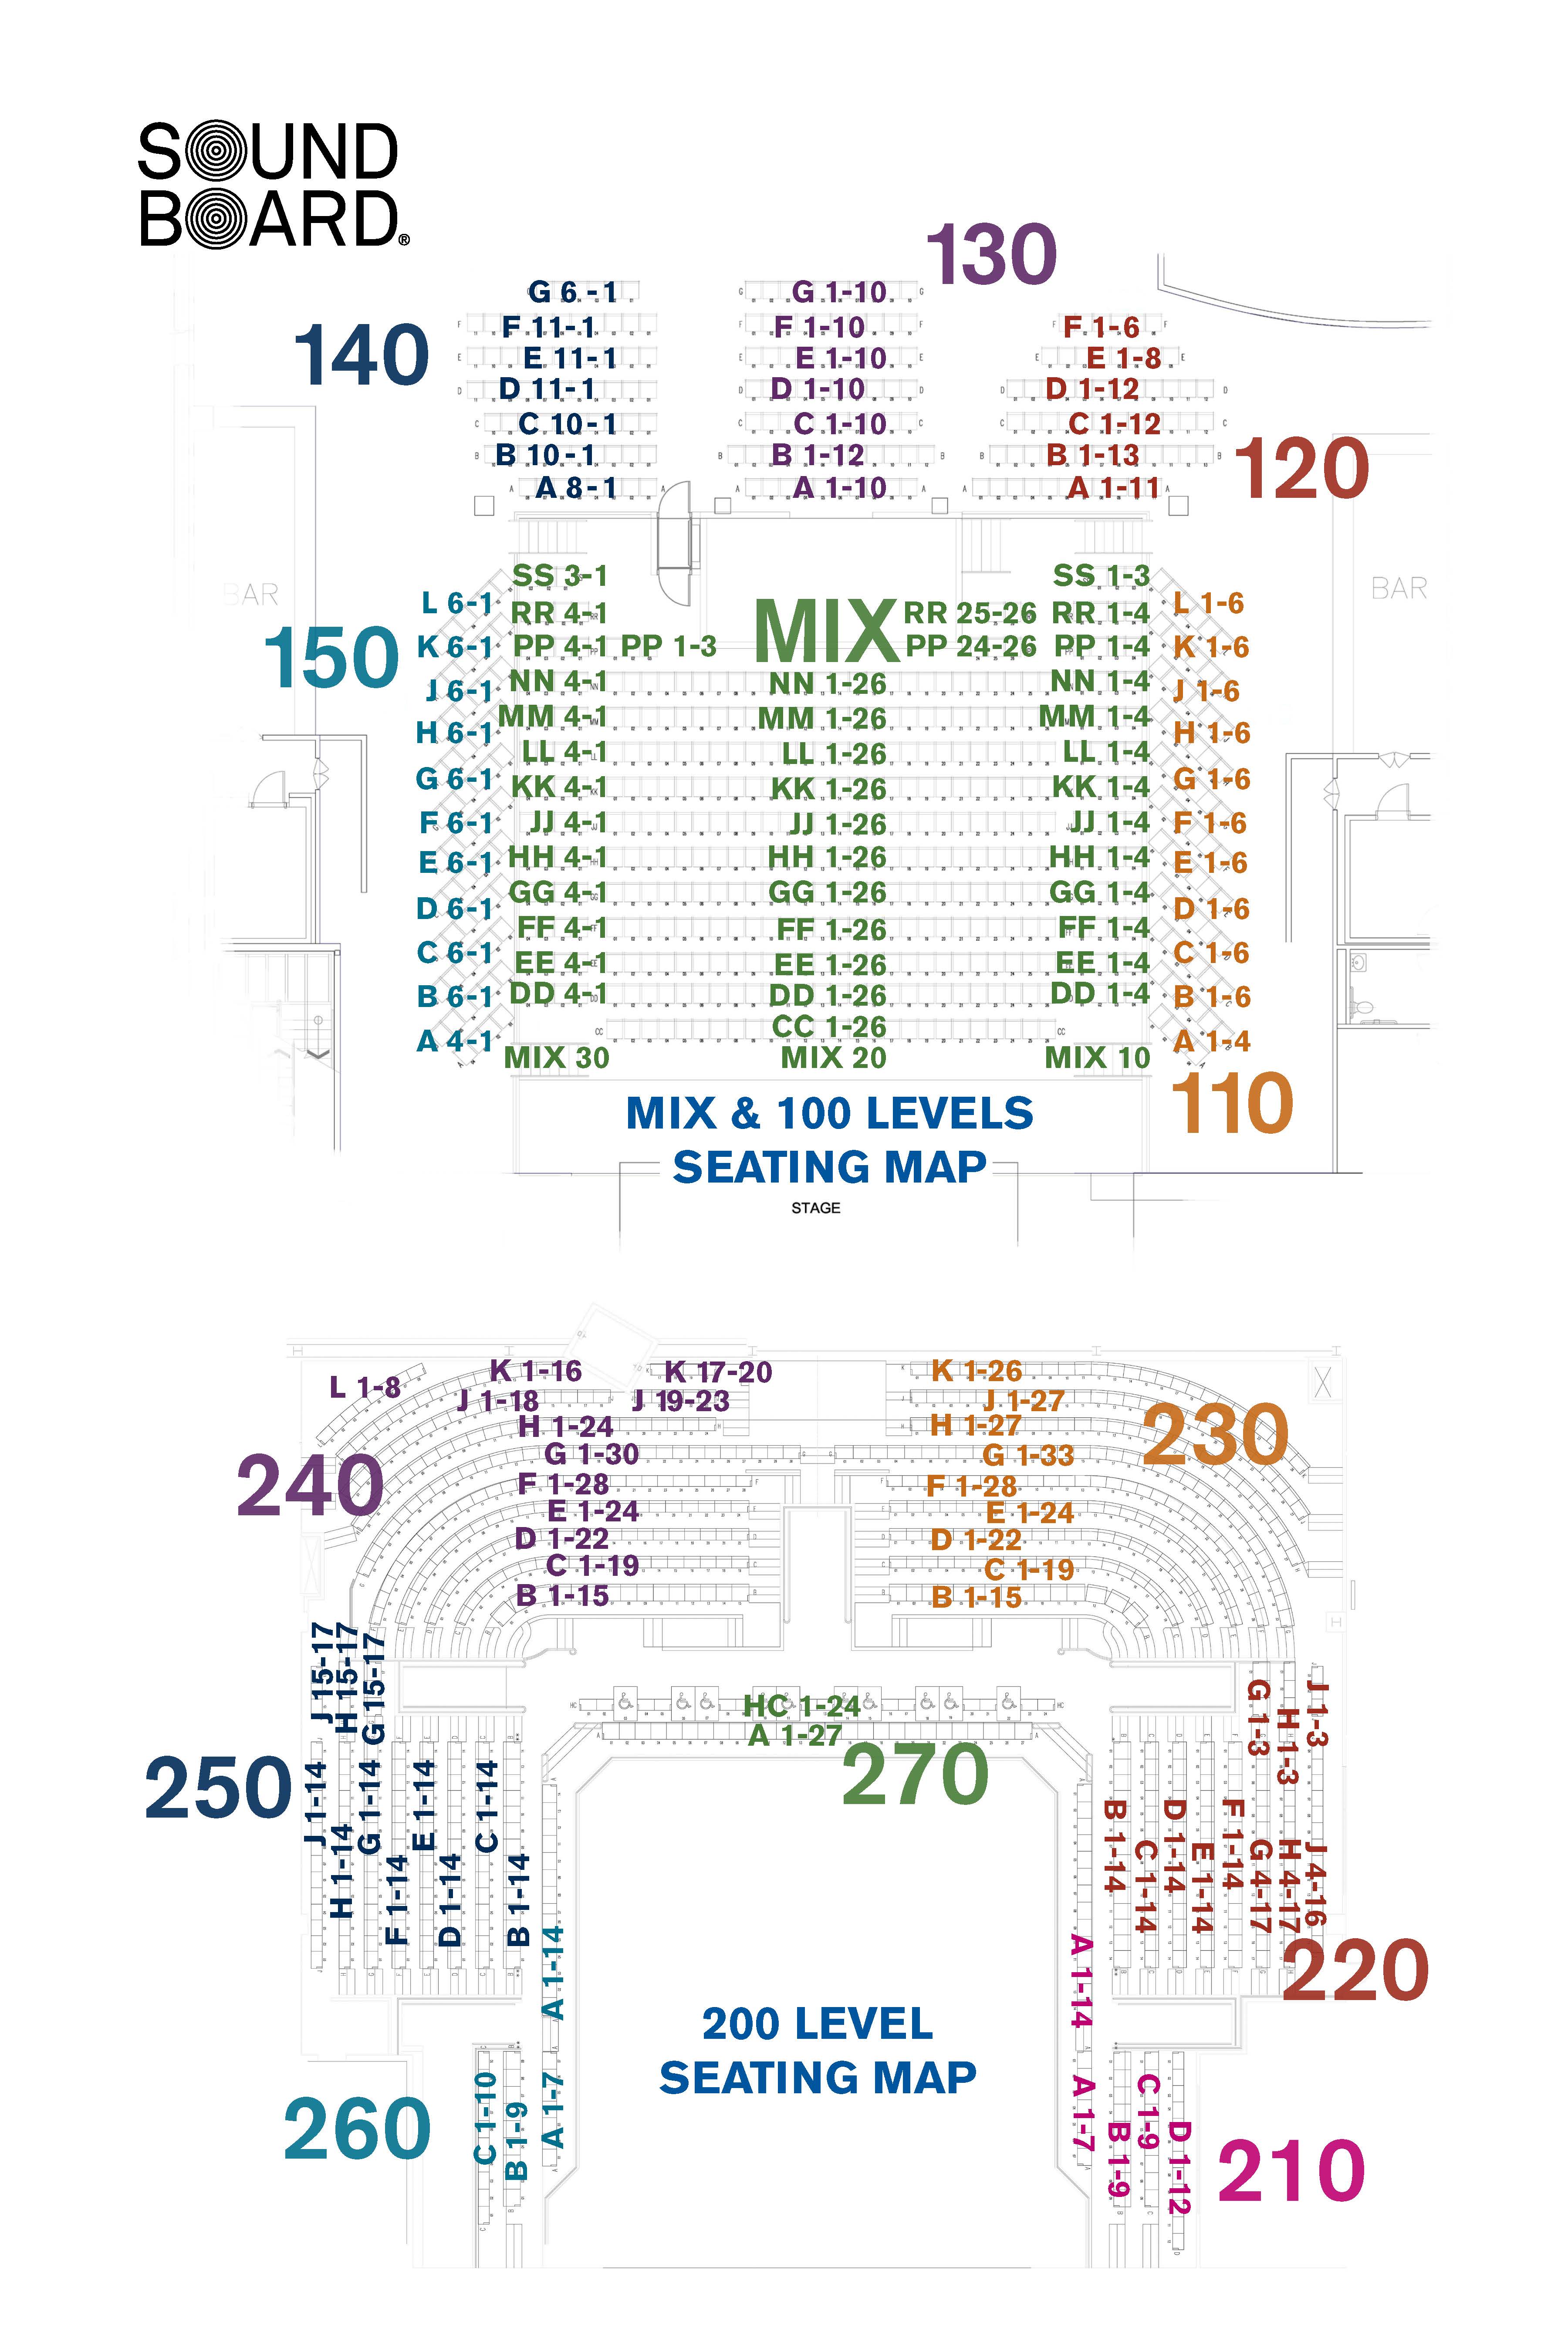 Motor City Soundboard Seating Chart